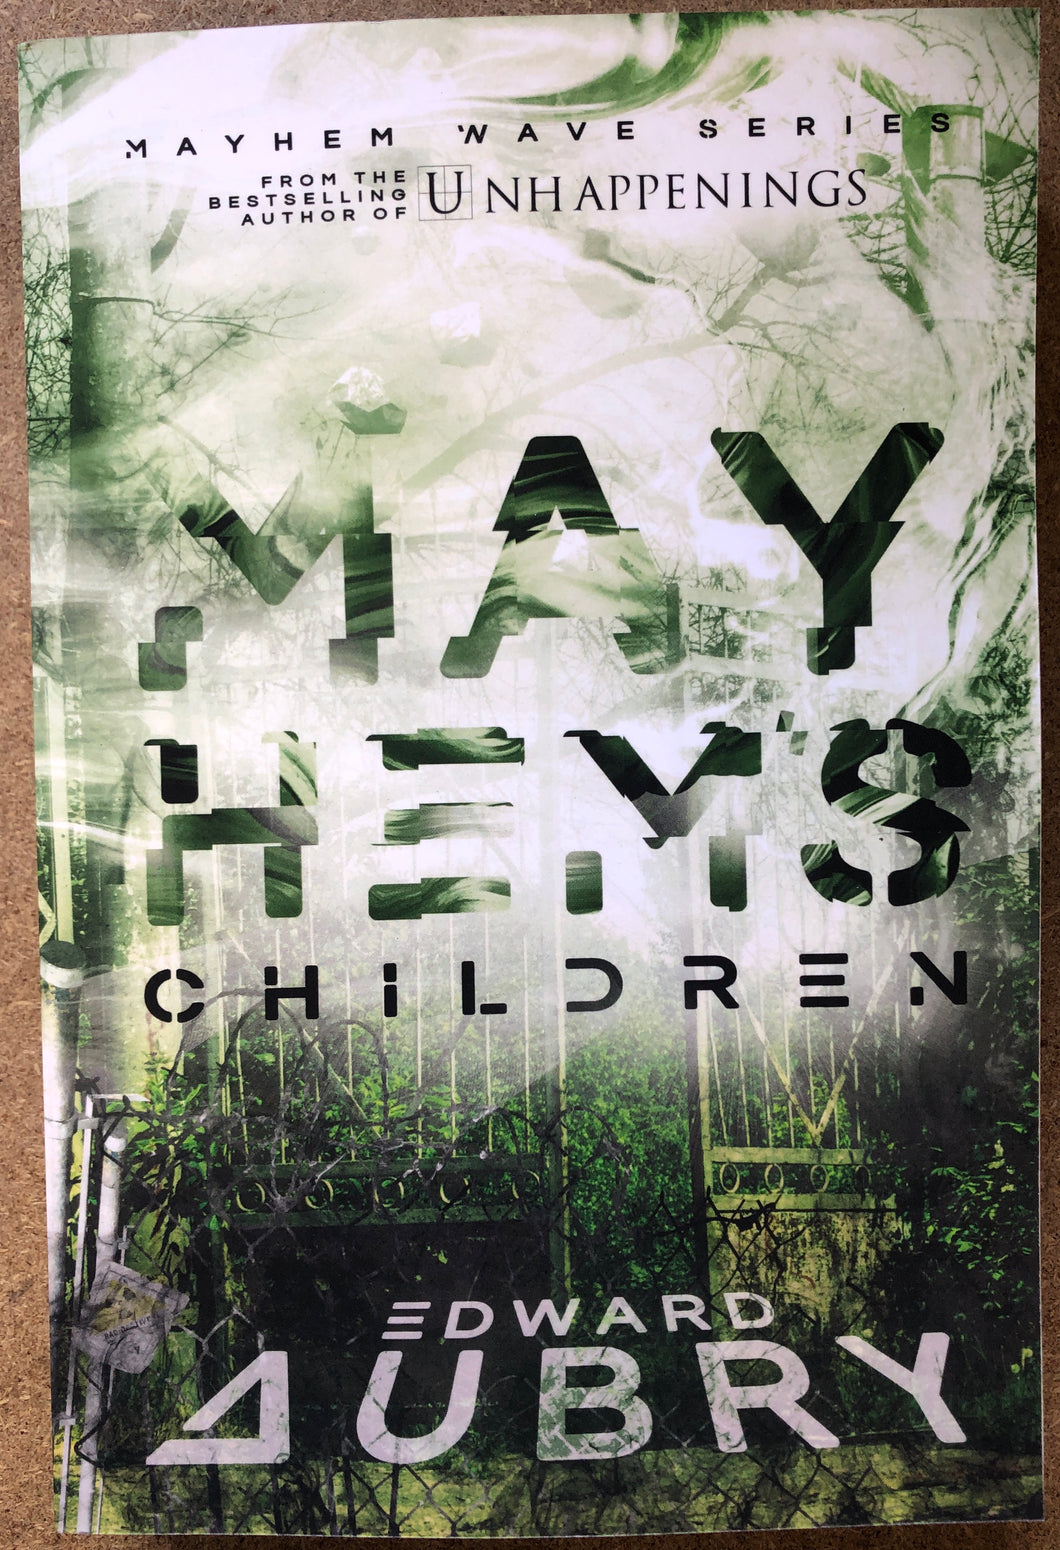 MAYHEM'S CHILDREN BY EDWARD AUBRY - MAYHEM WAVE SERIES BOOK 3 - Signed Copy